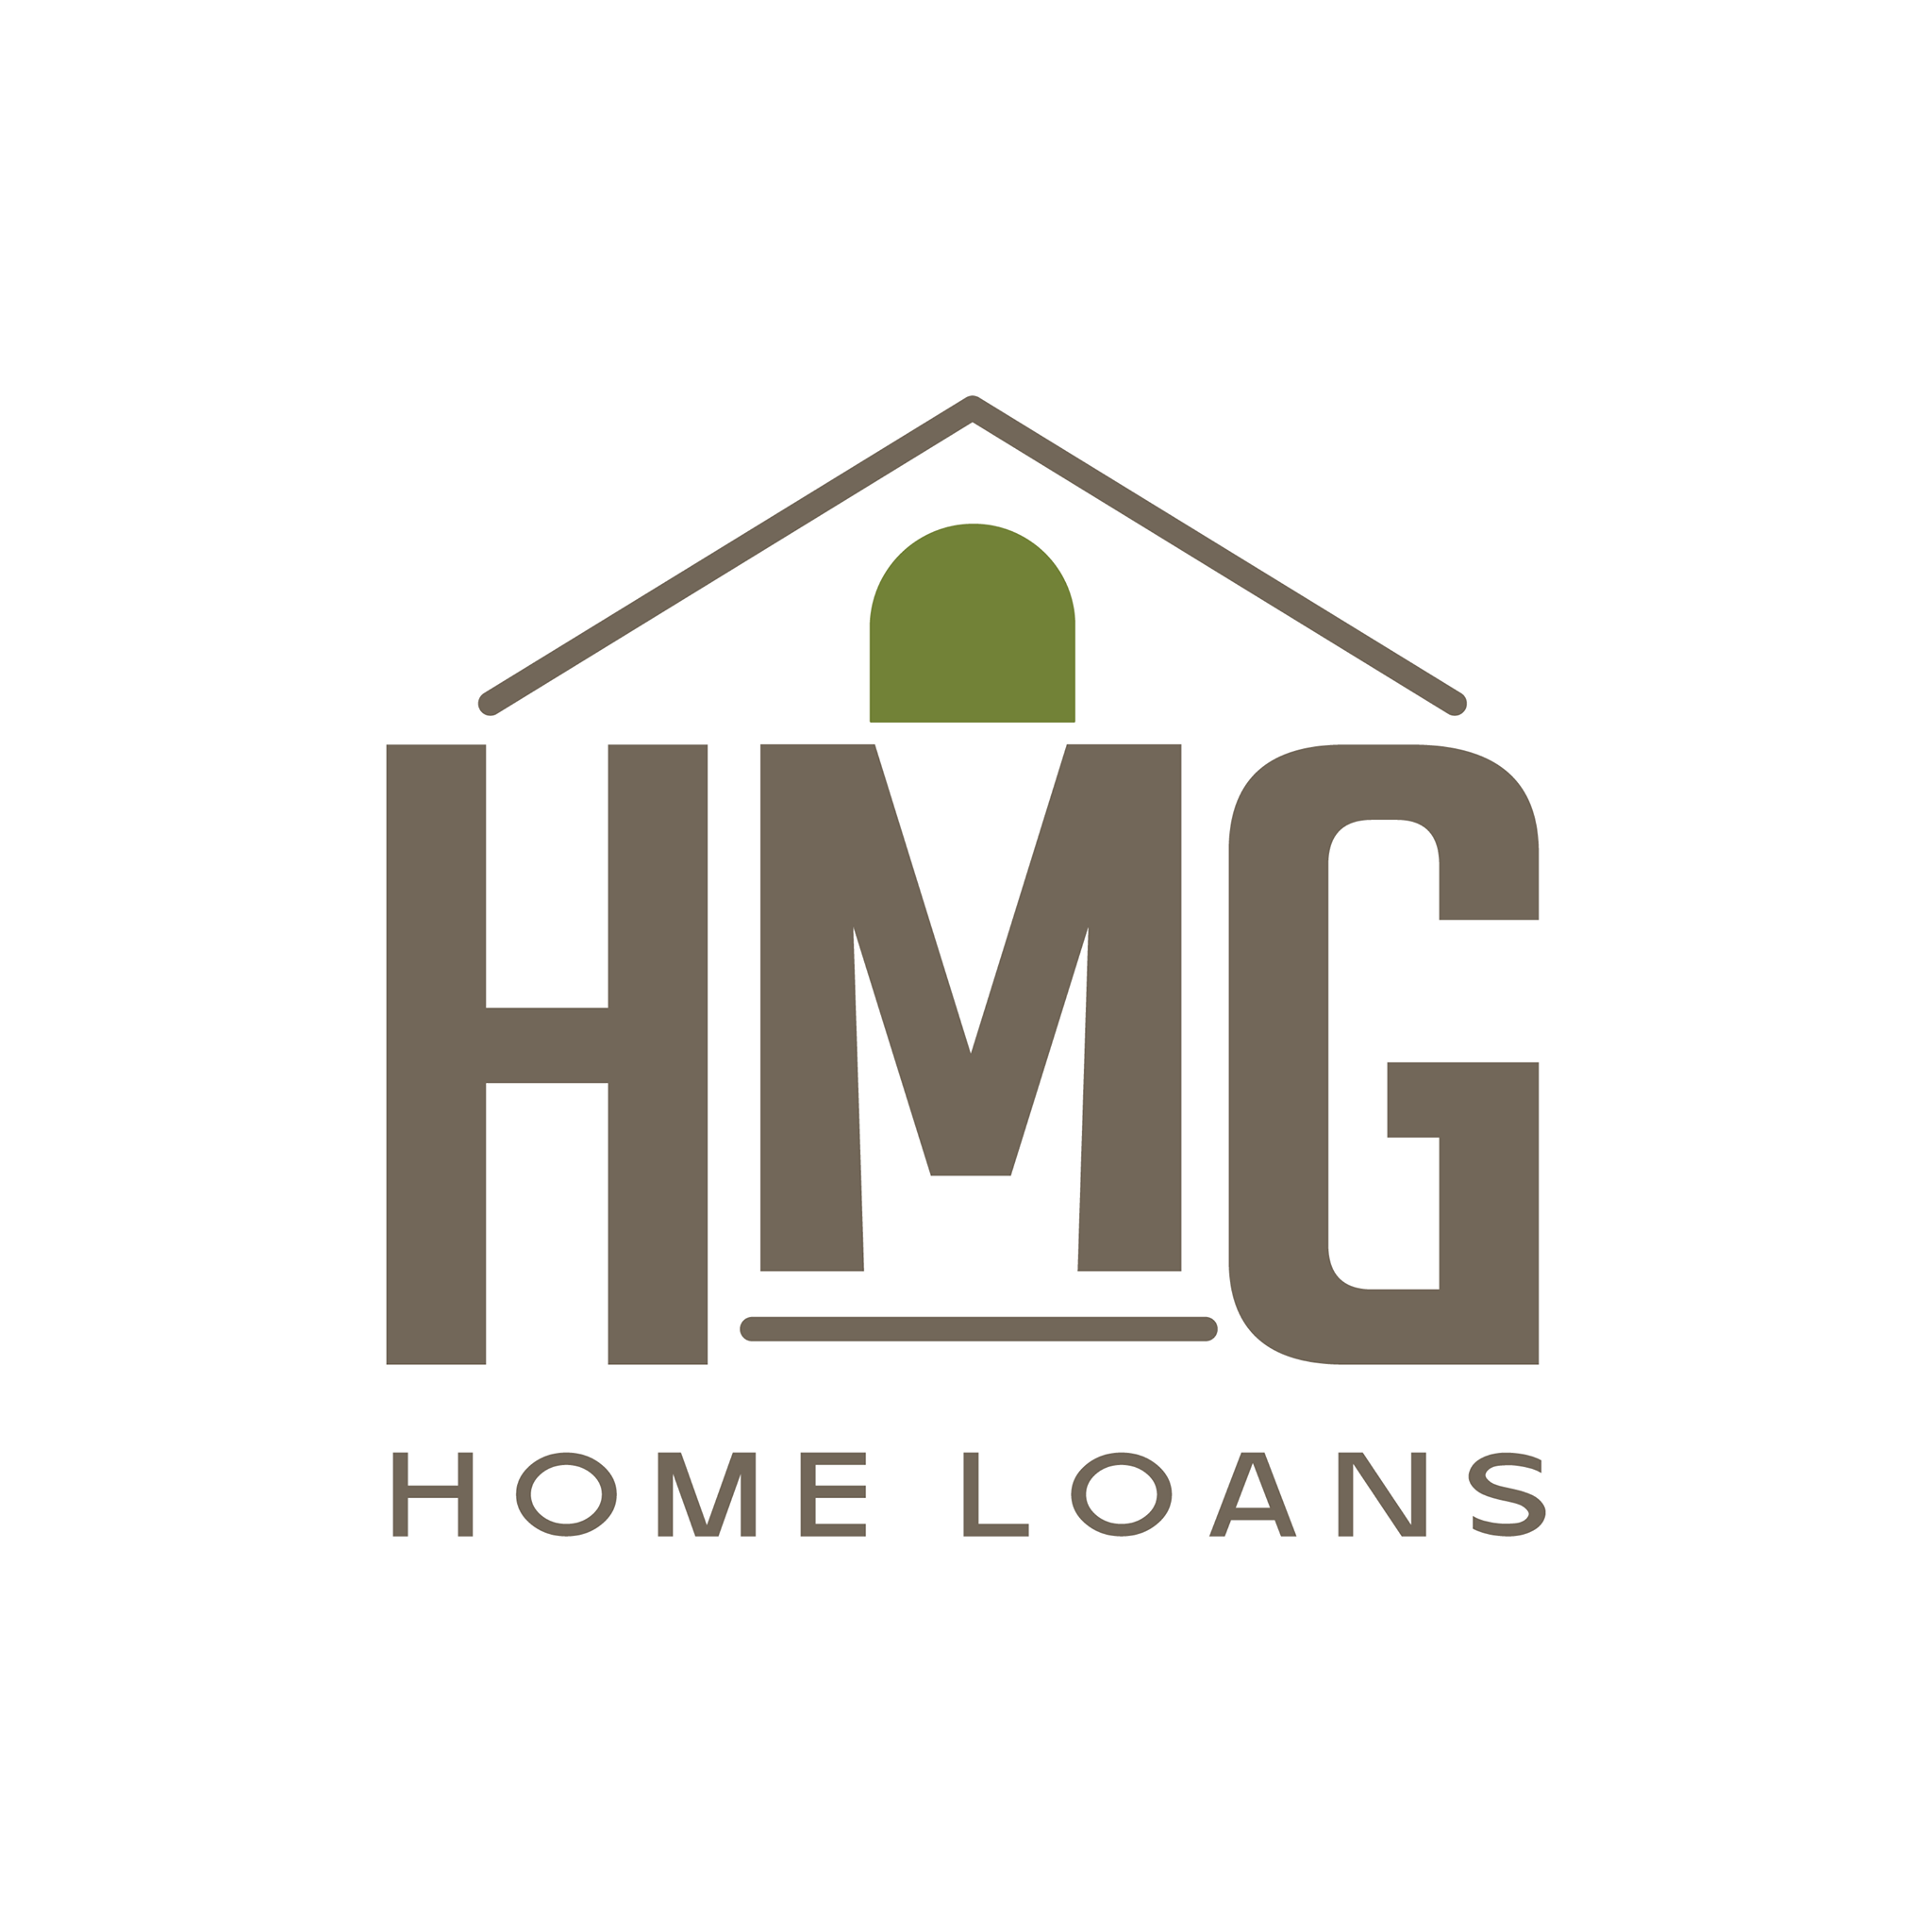 HMG Home Loans